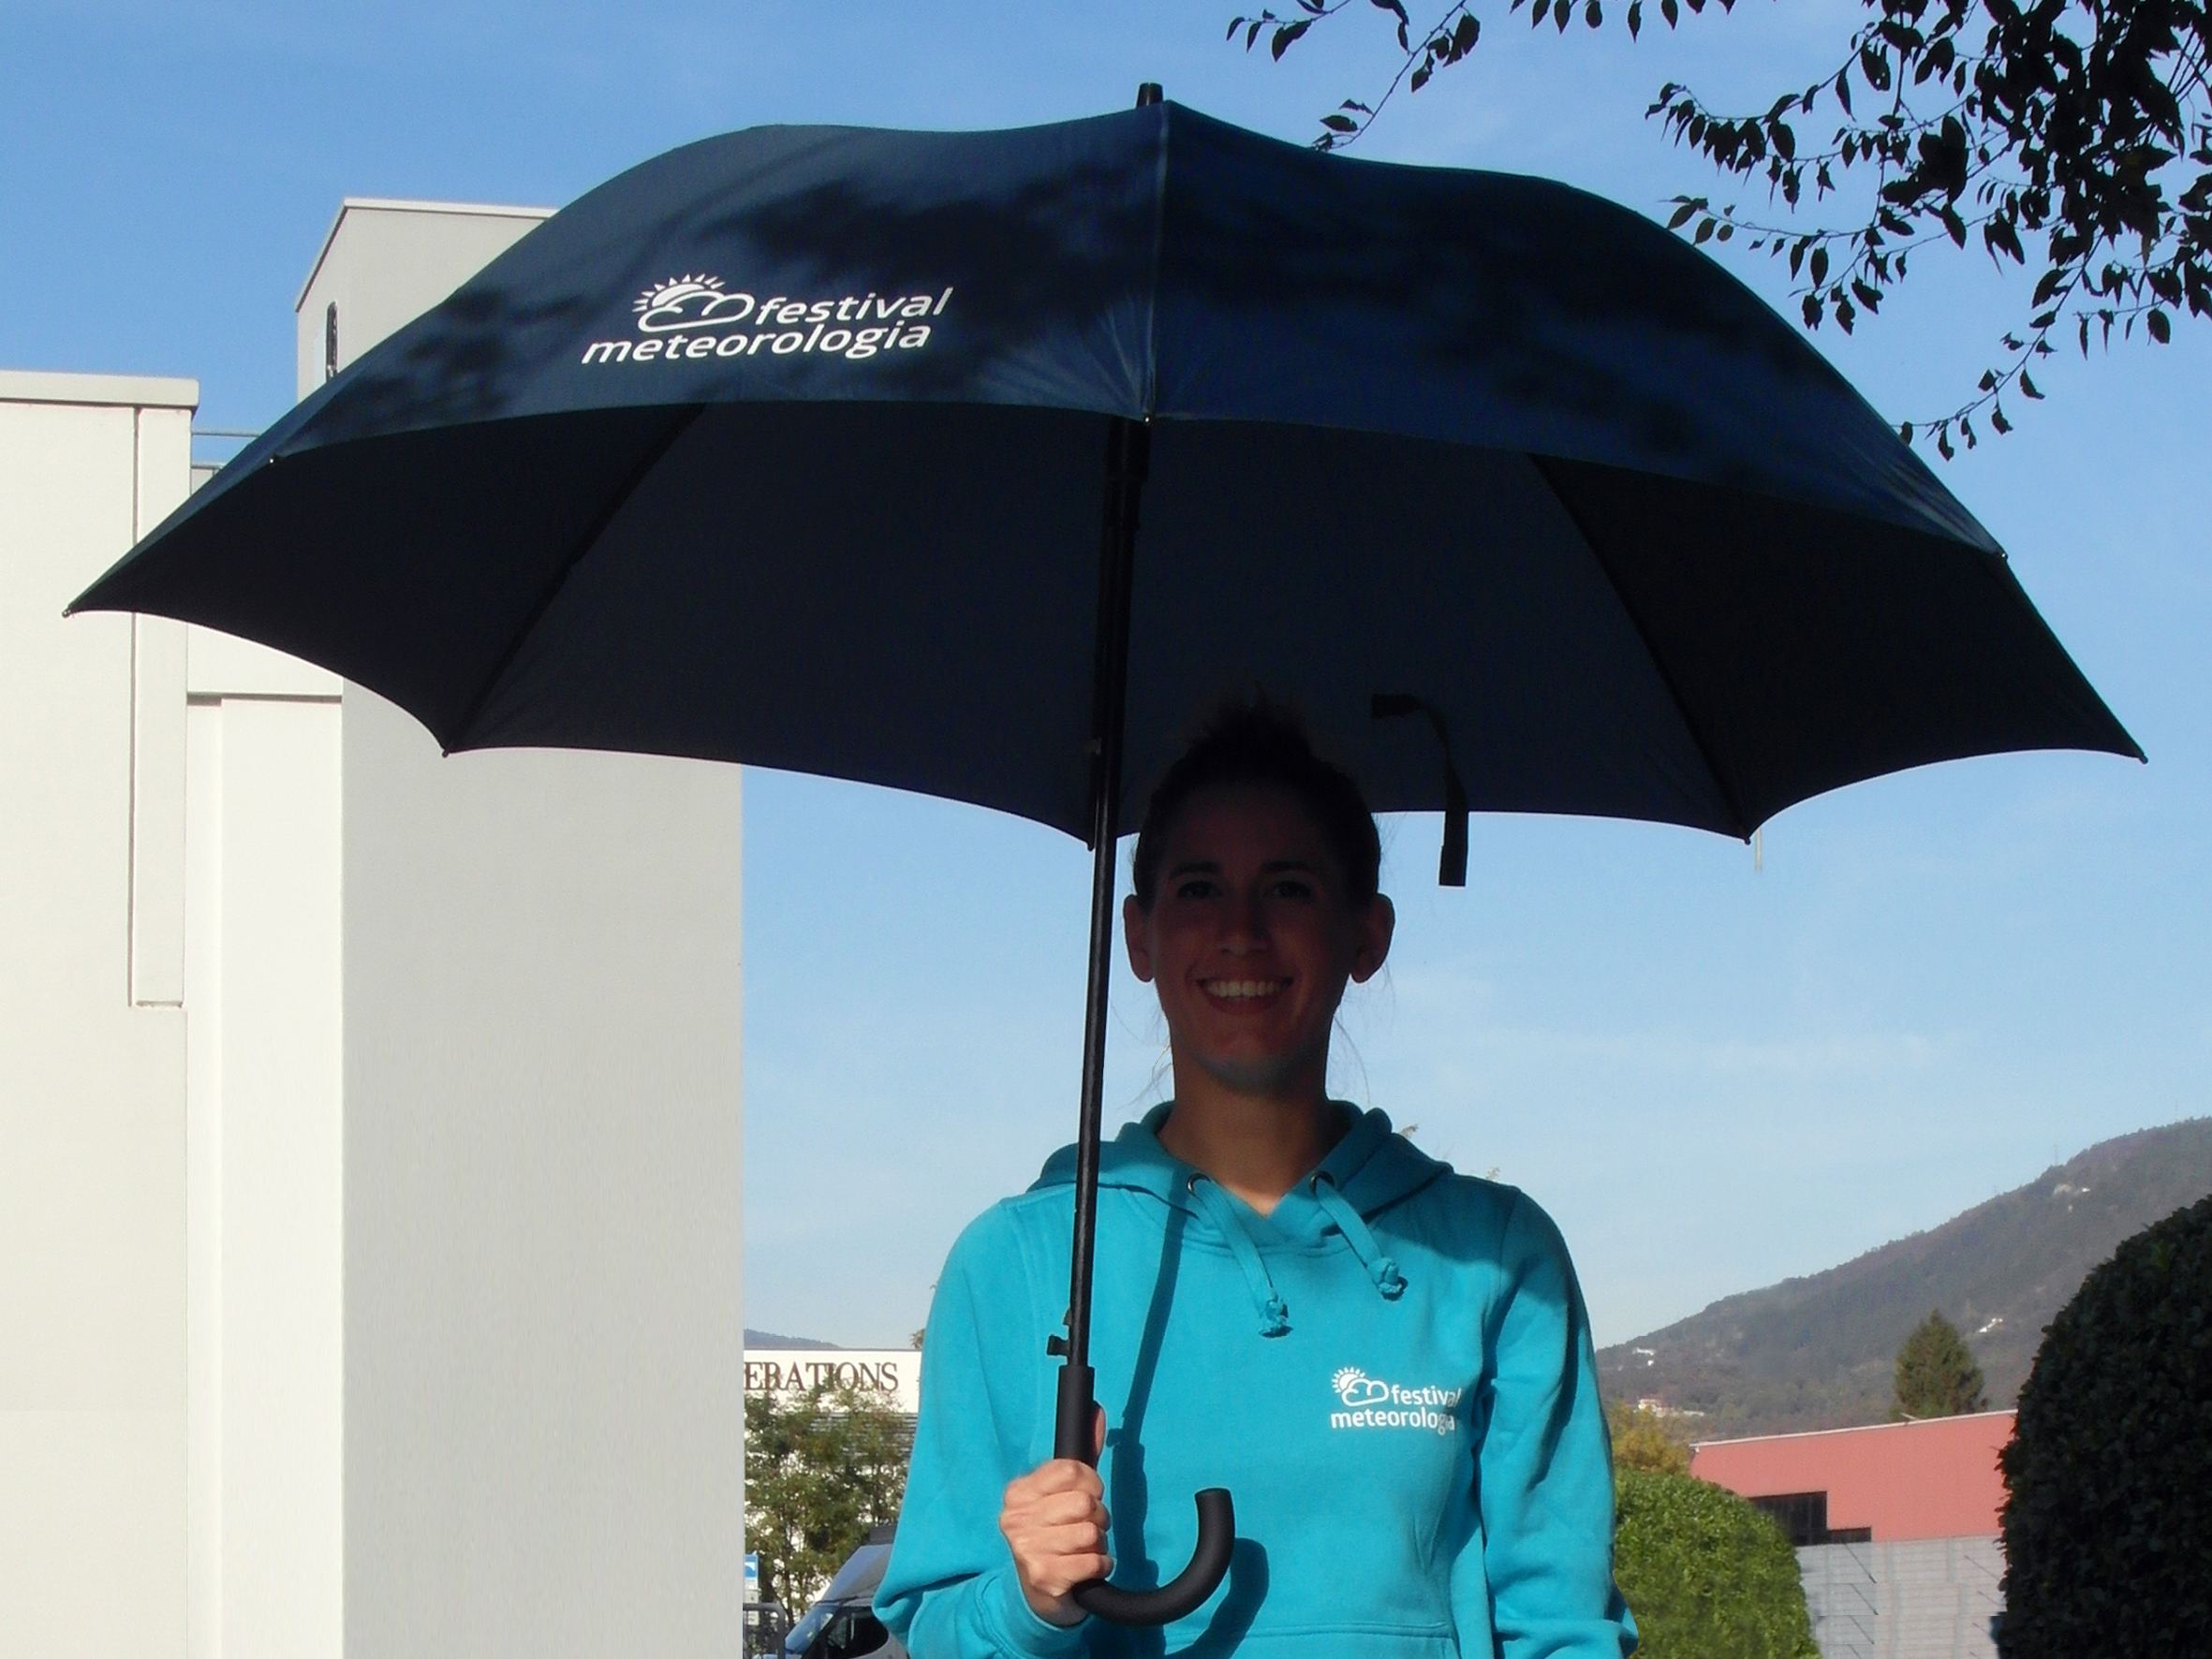 ombrello-festival-meteorologia-sadesign